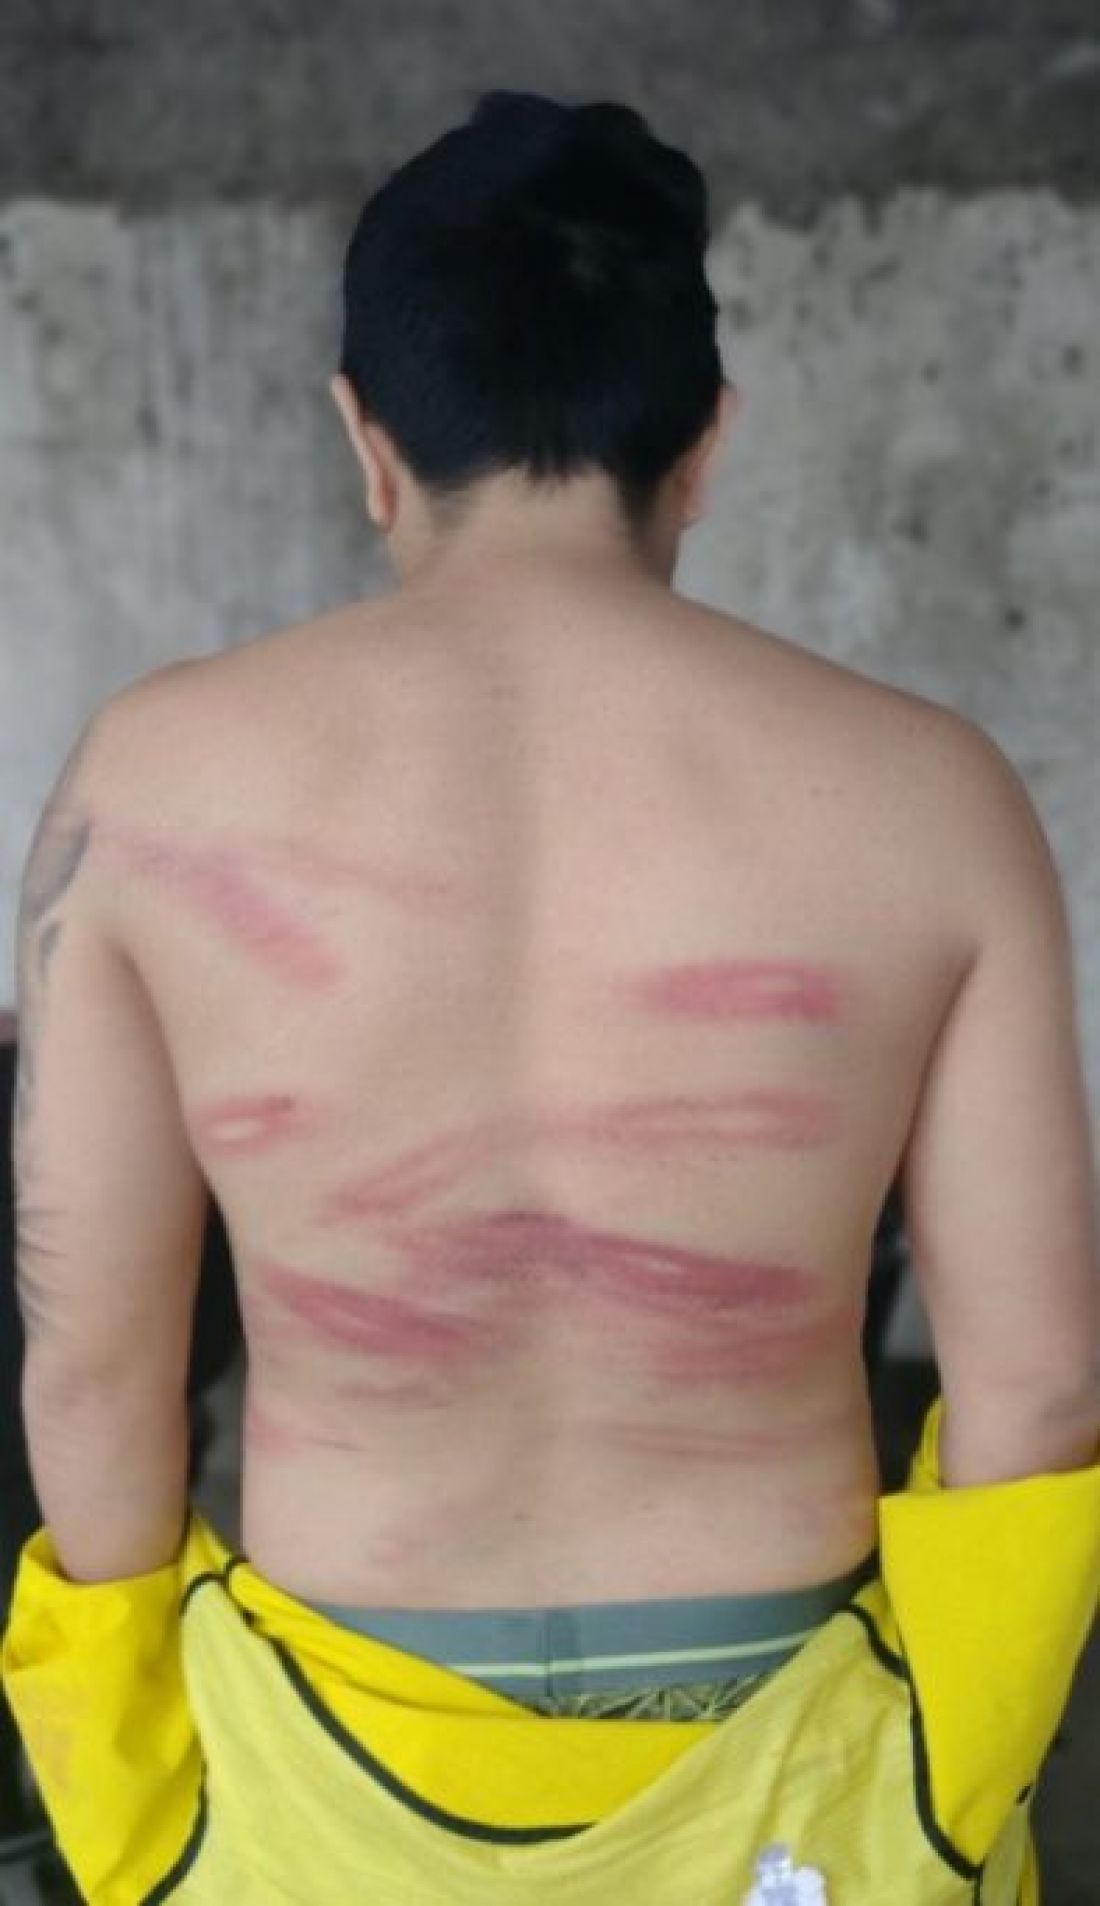 Aplicaron torturas con látigos y cahiporras: 10 policías de Tartagal quedaron detenidos